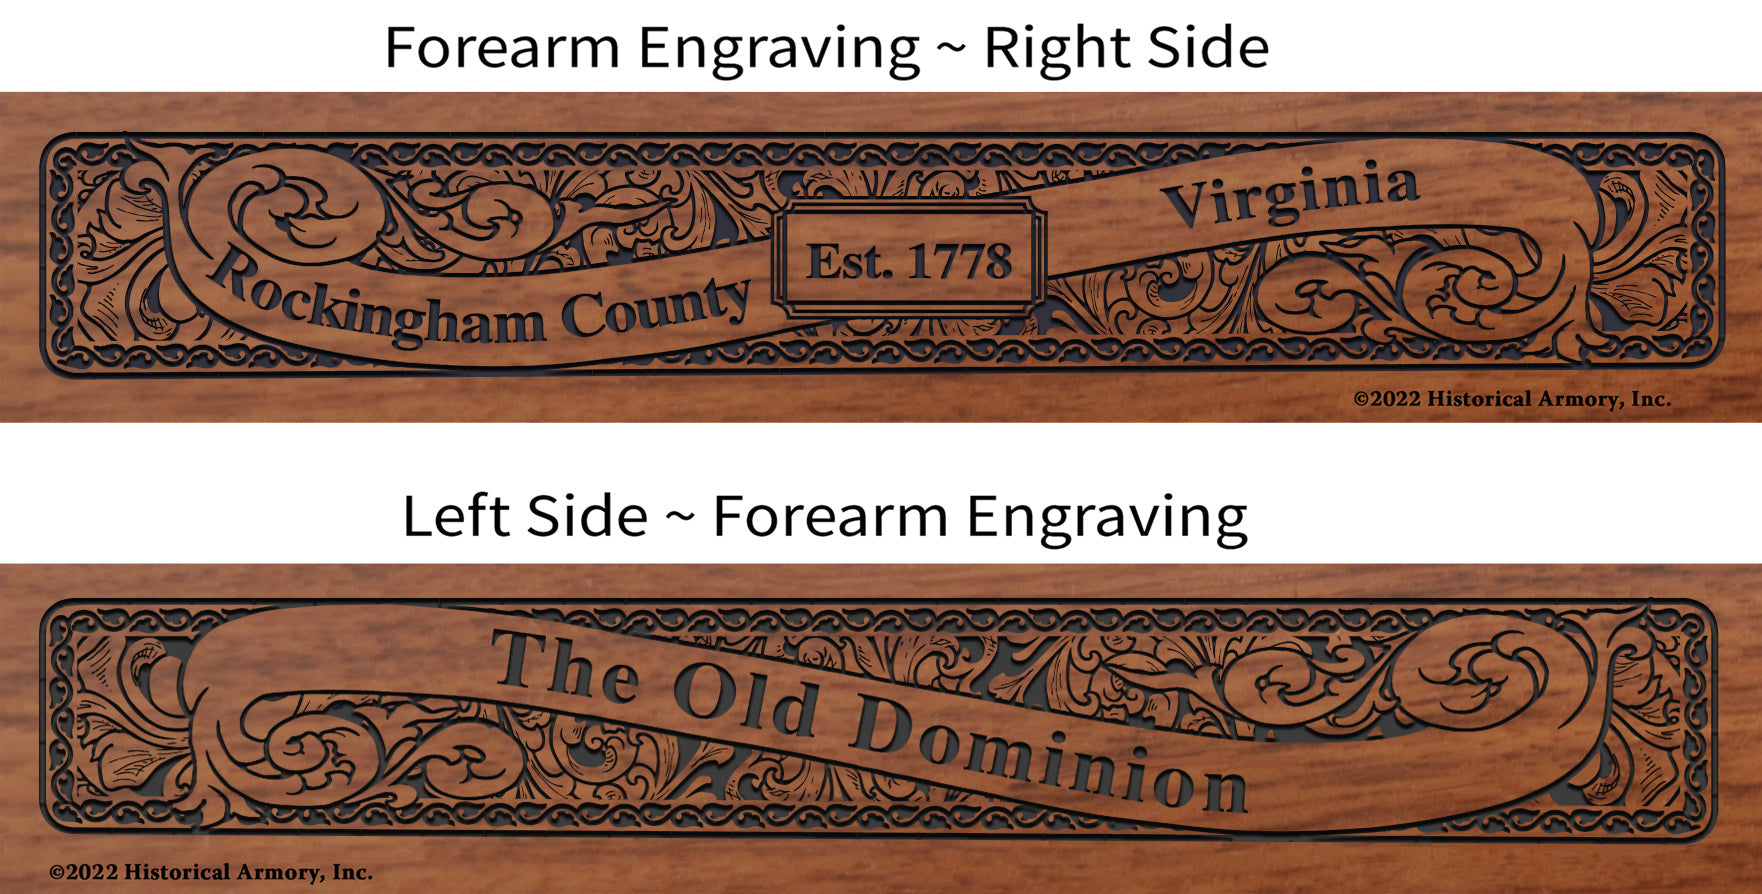 Rockingham County Virginia Engraved Rifle Forearm